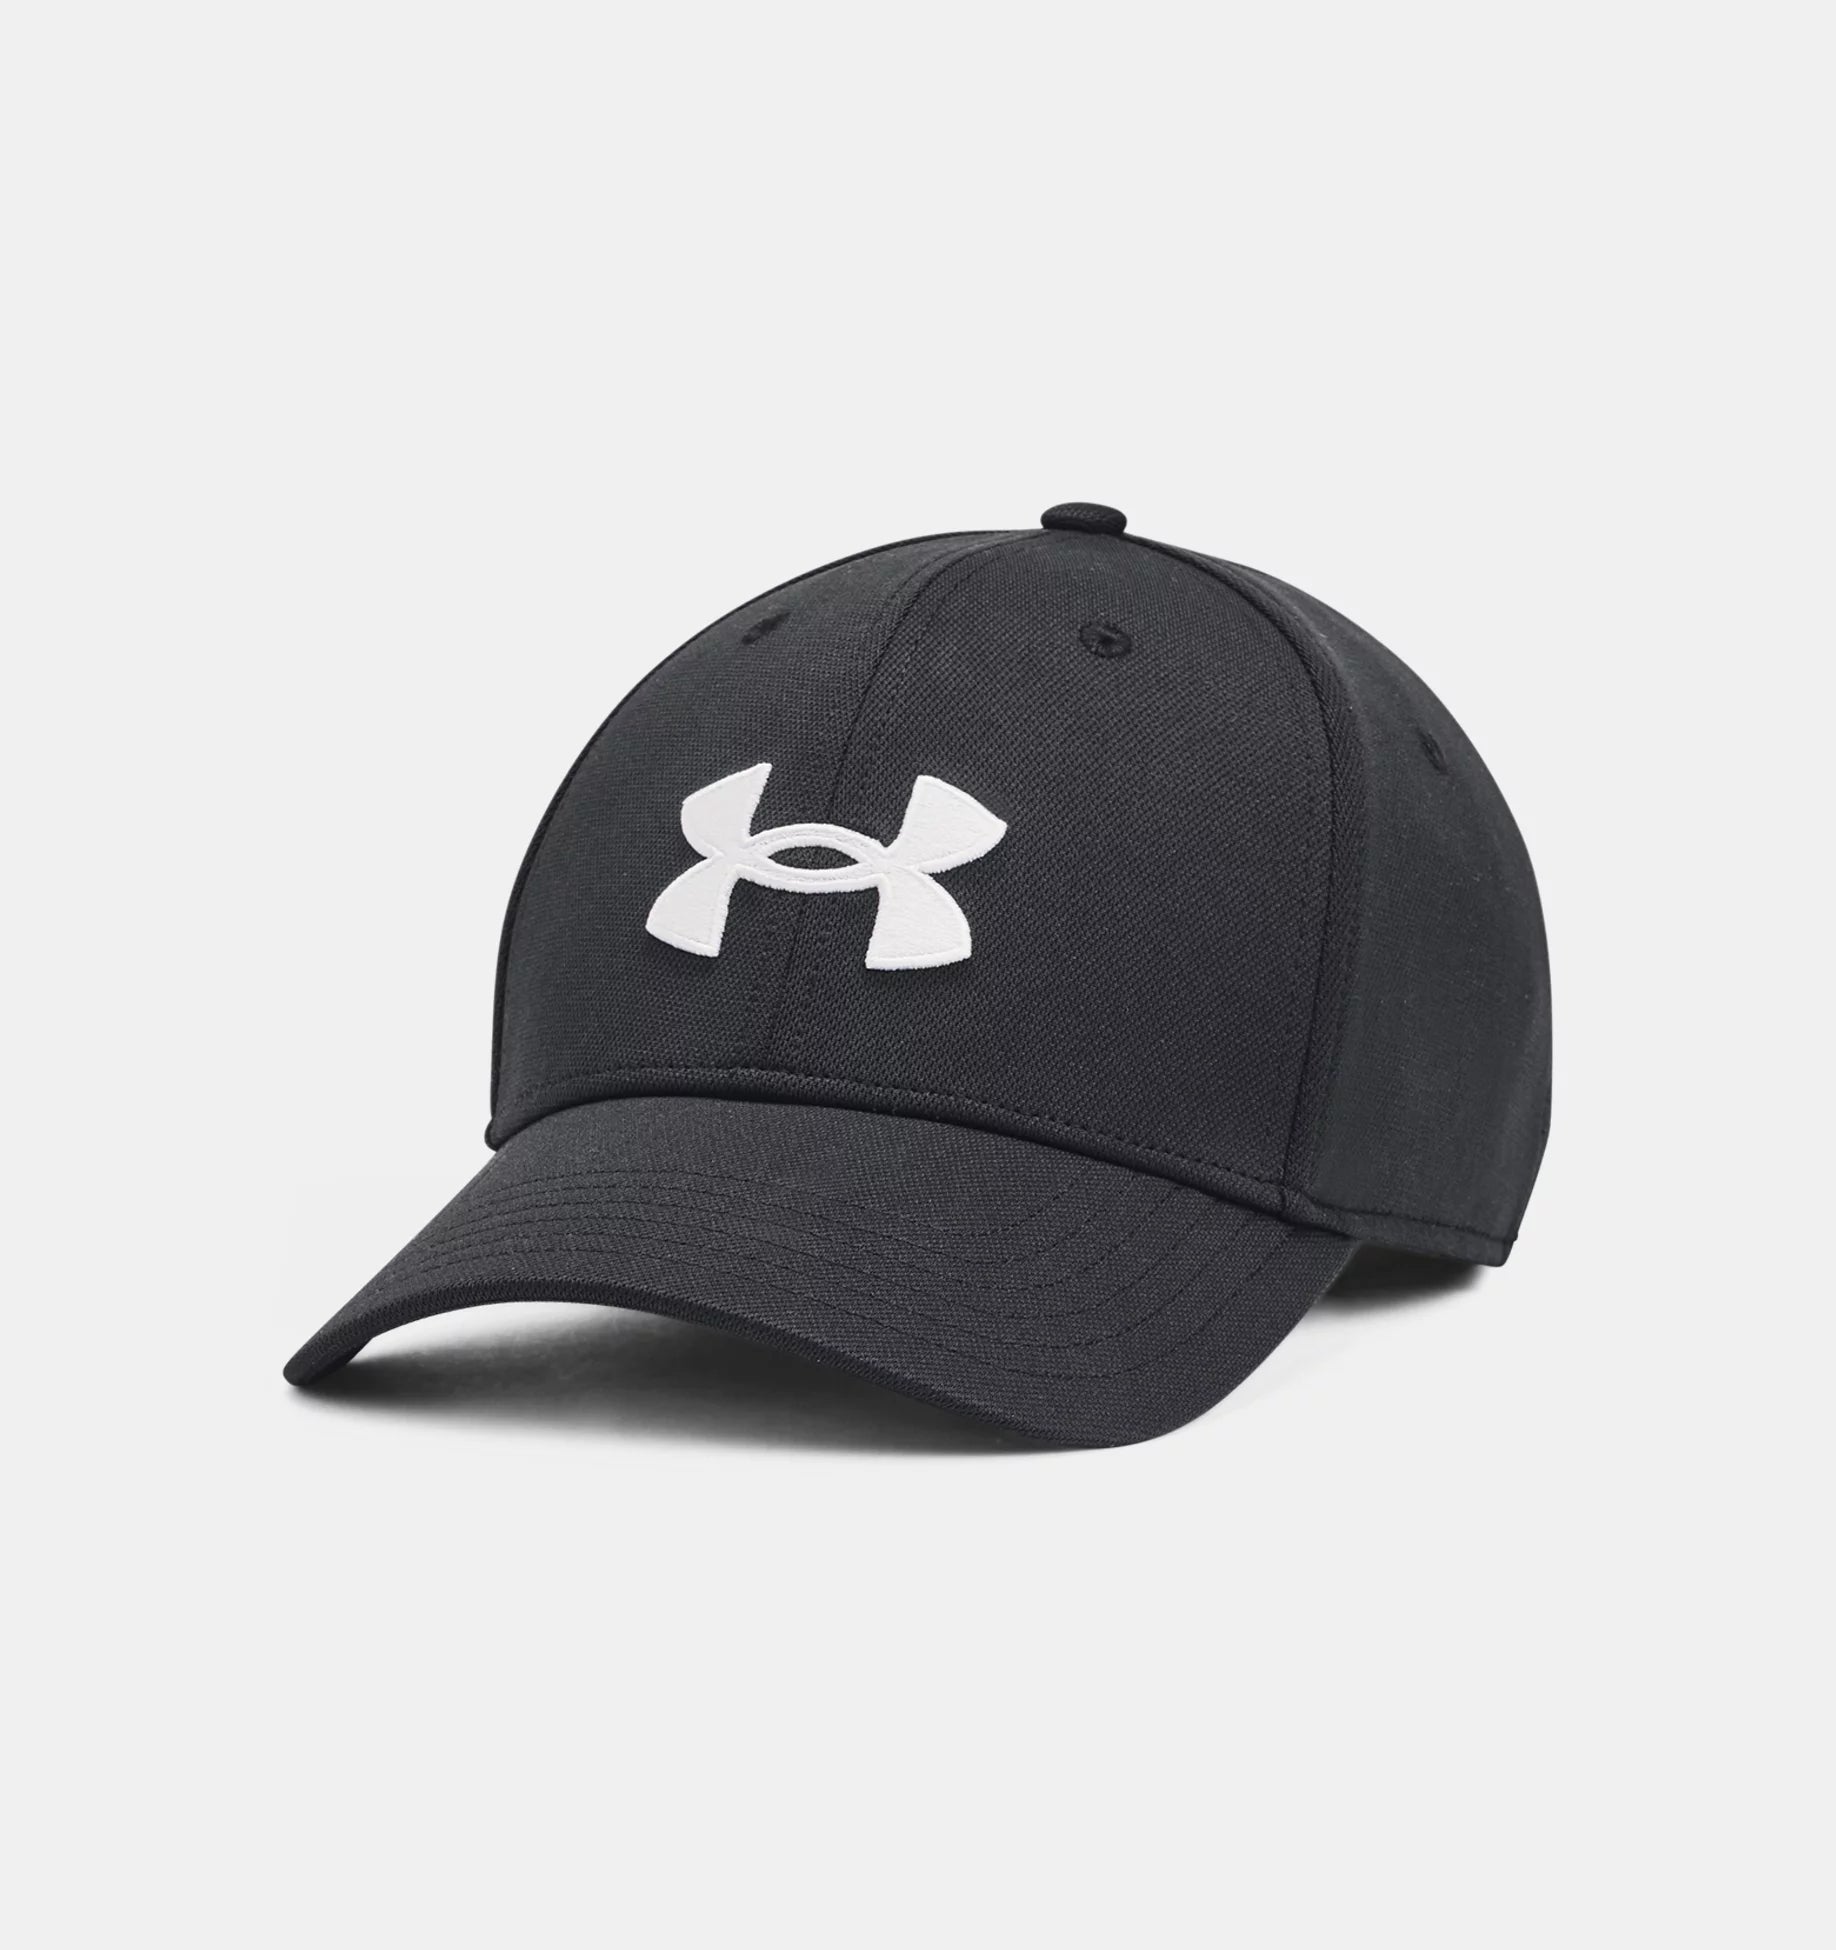 Under Armor Sportstyle Logo T-Shirt - Black/White – Footkorner